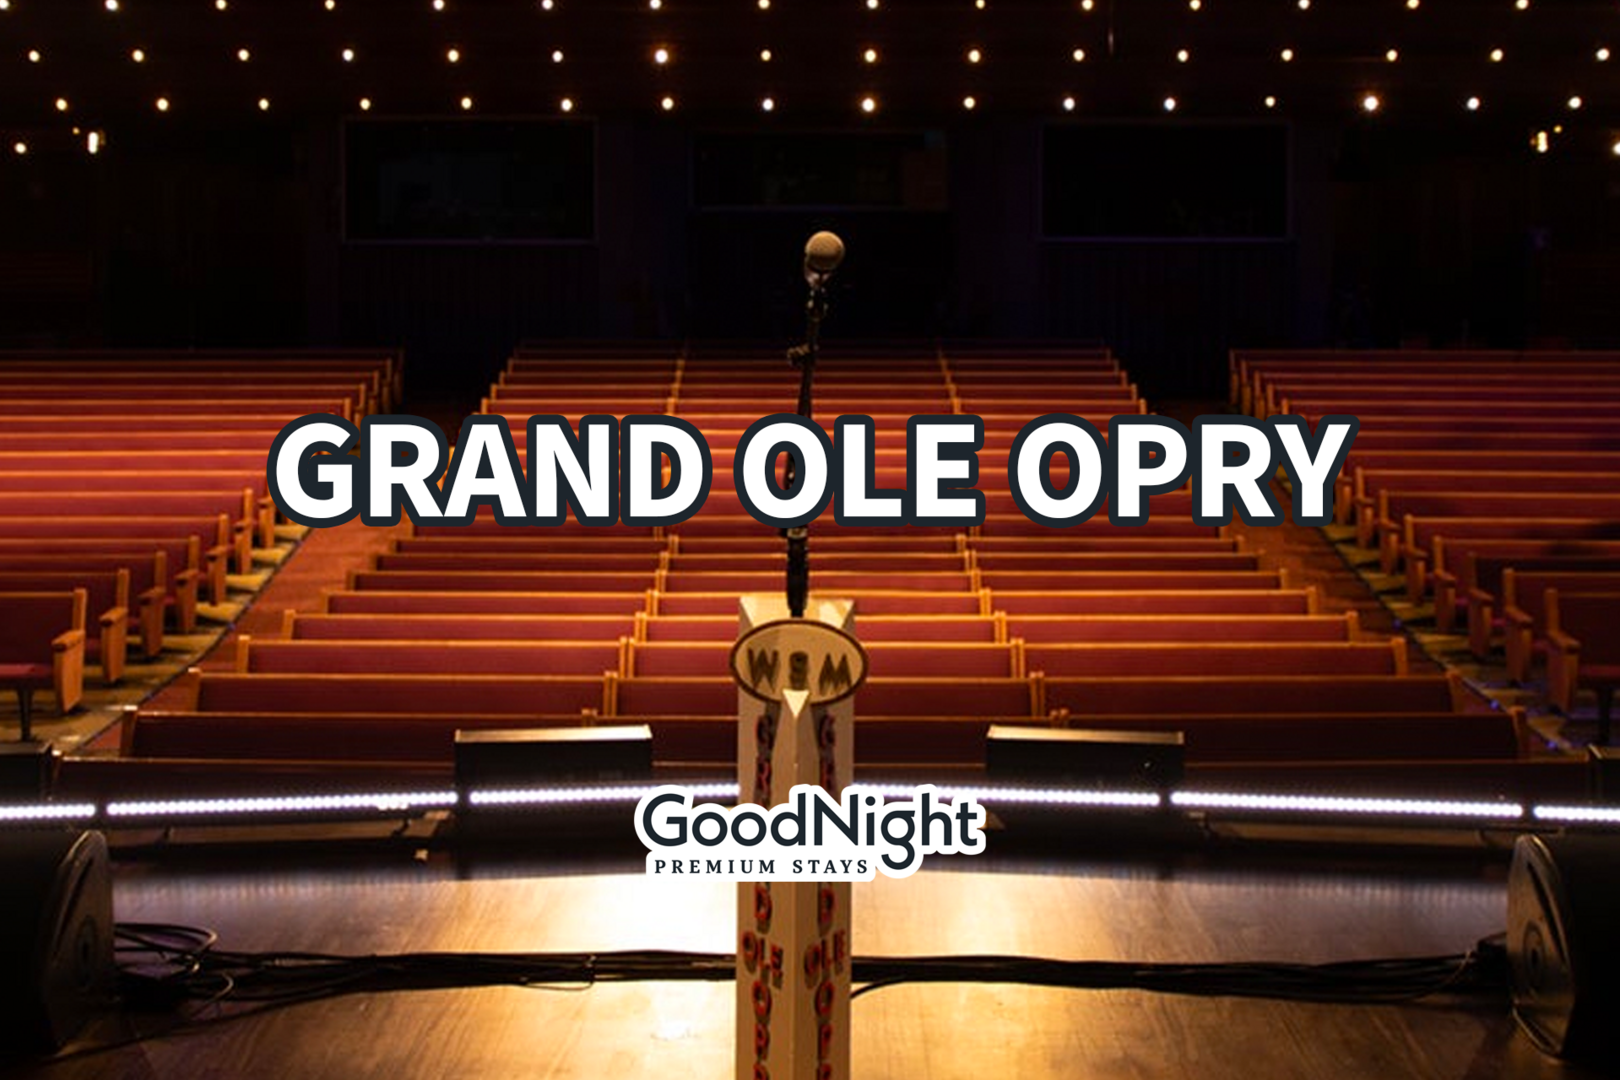 15 mins: The Grand Ole Opry